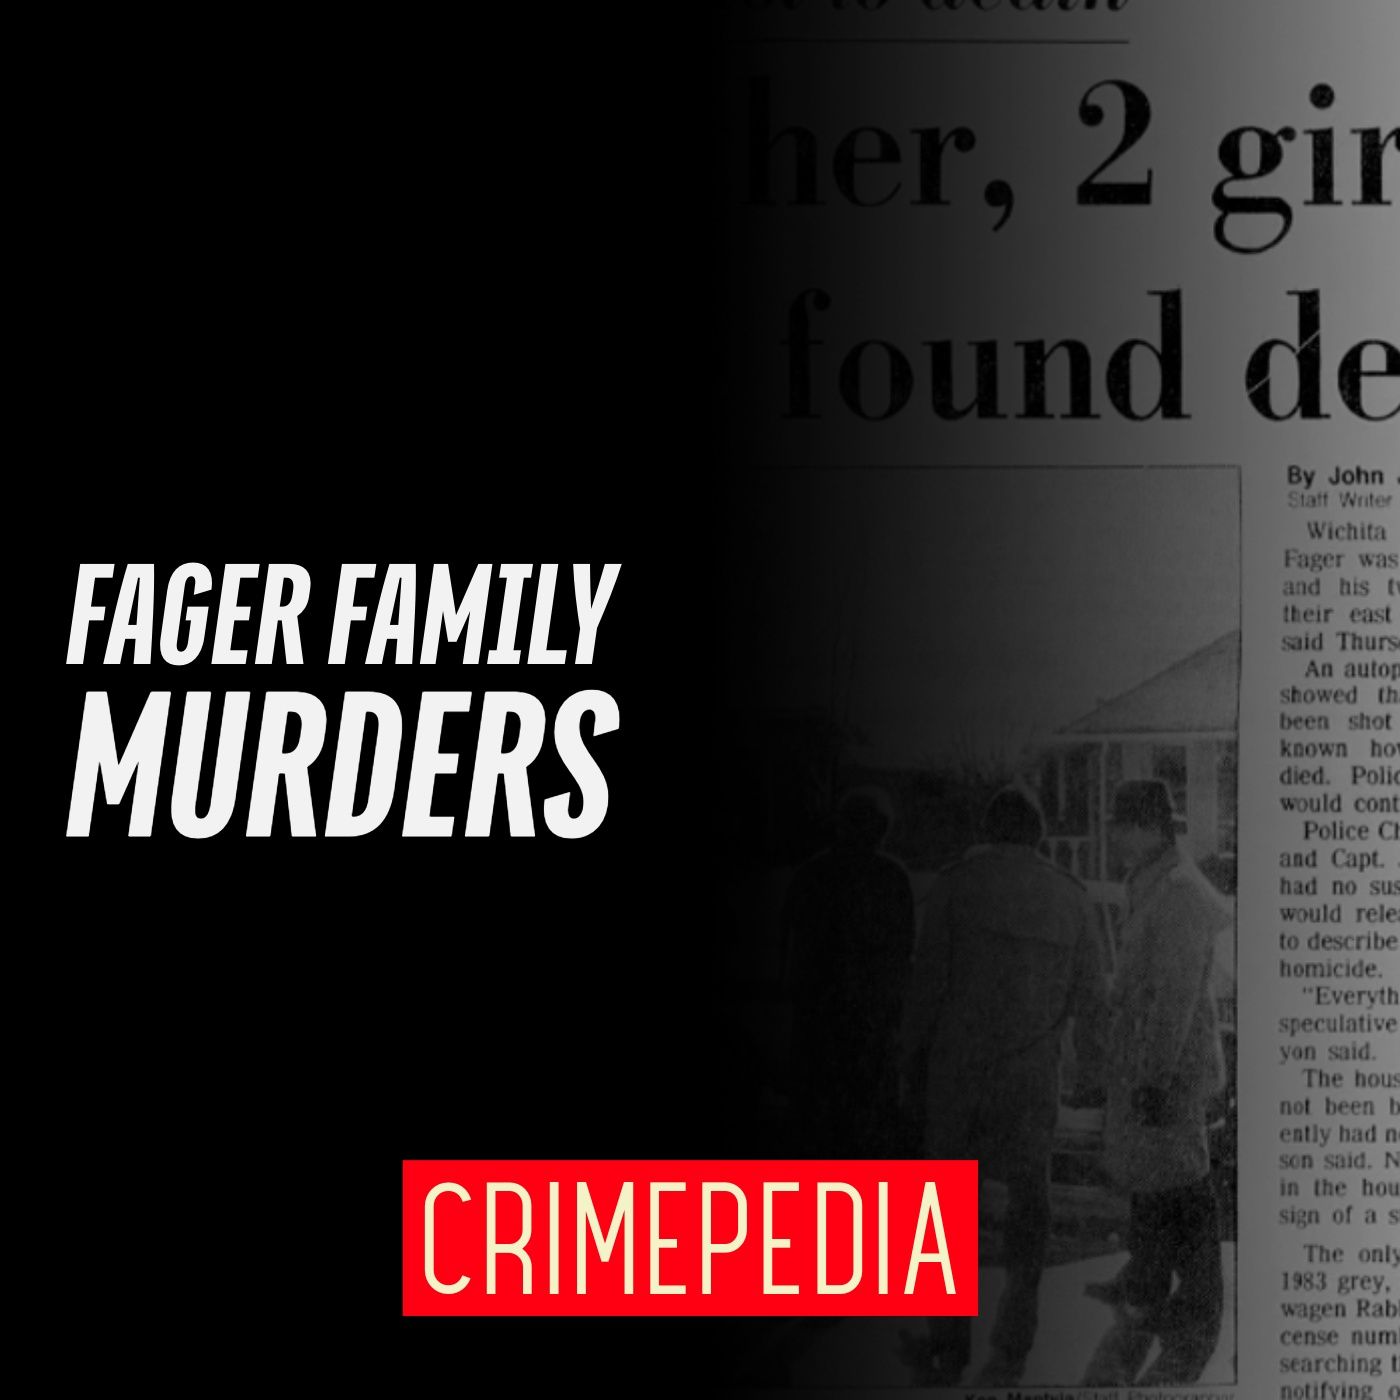 Fager Family Murders